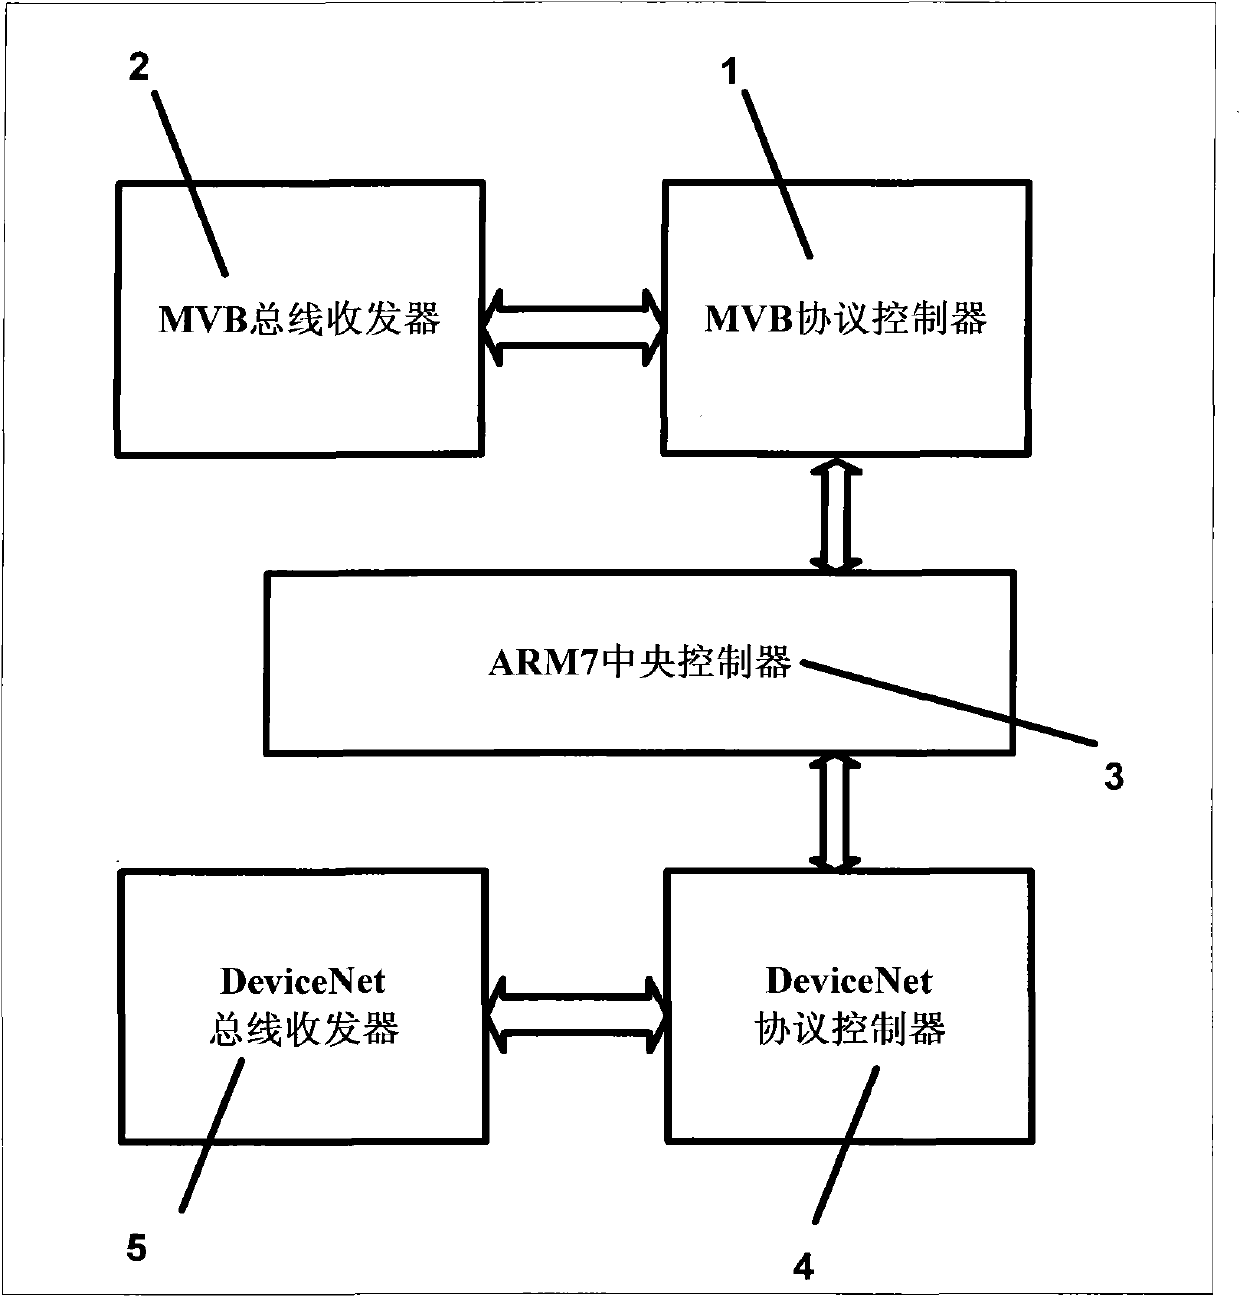 ARM7-based MVB gateway and working method thereof